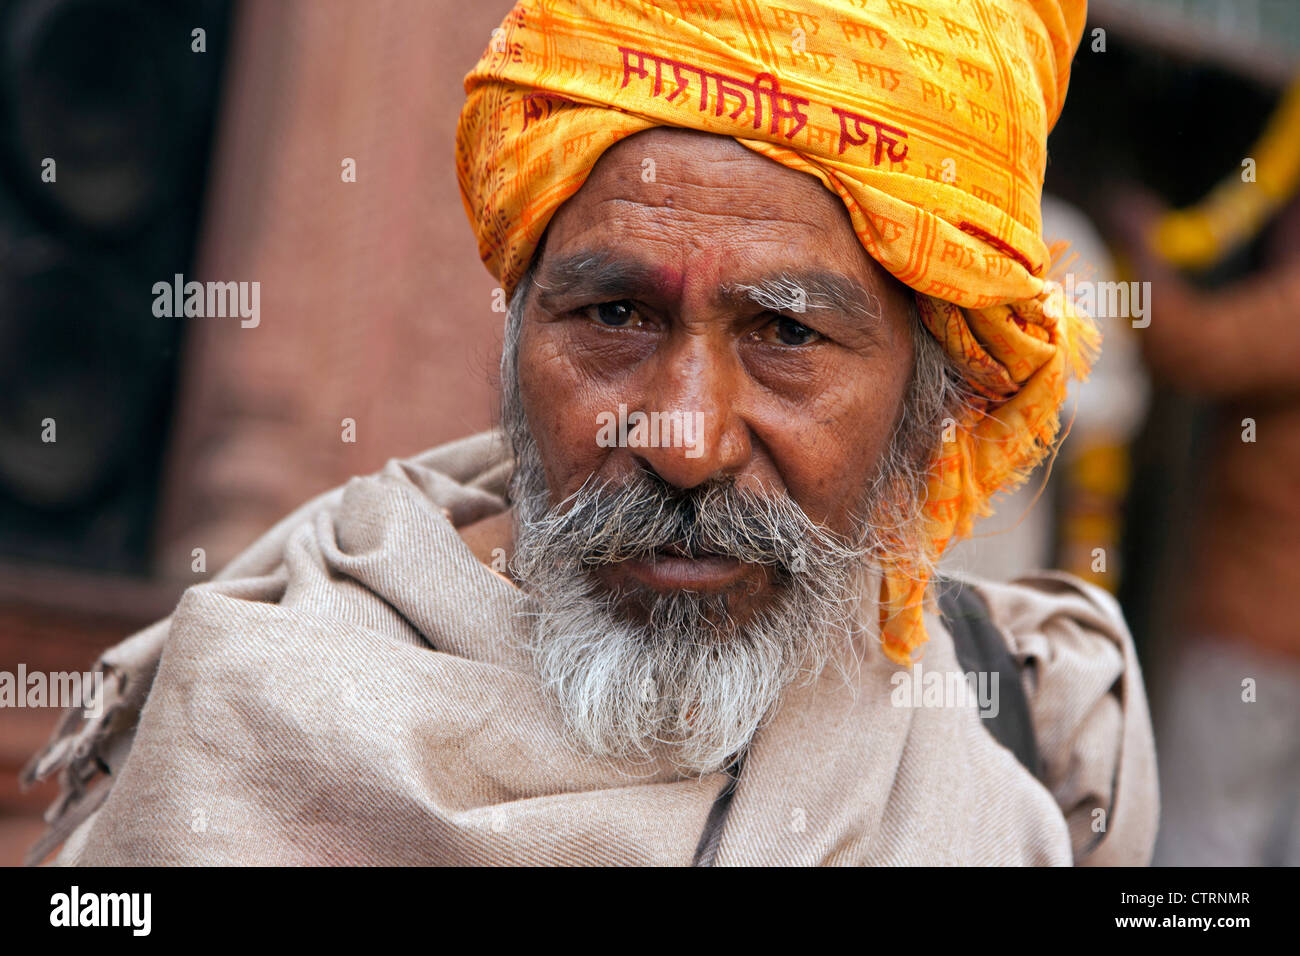 Portrait of Indian follower of the Hare Krishna movement wearing orange turban in Vrindavan, Uttar Pradesh, India Stock Photo